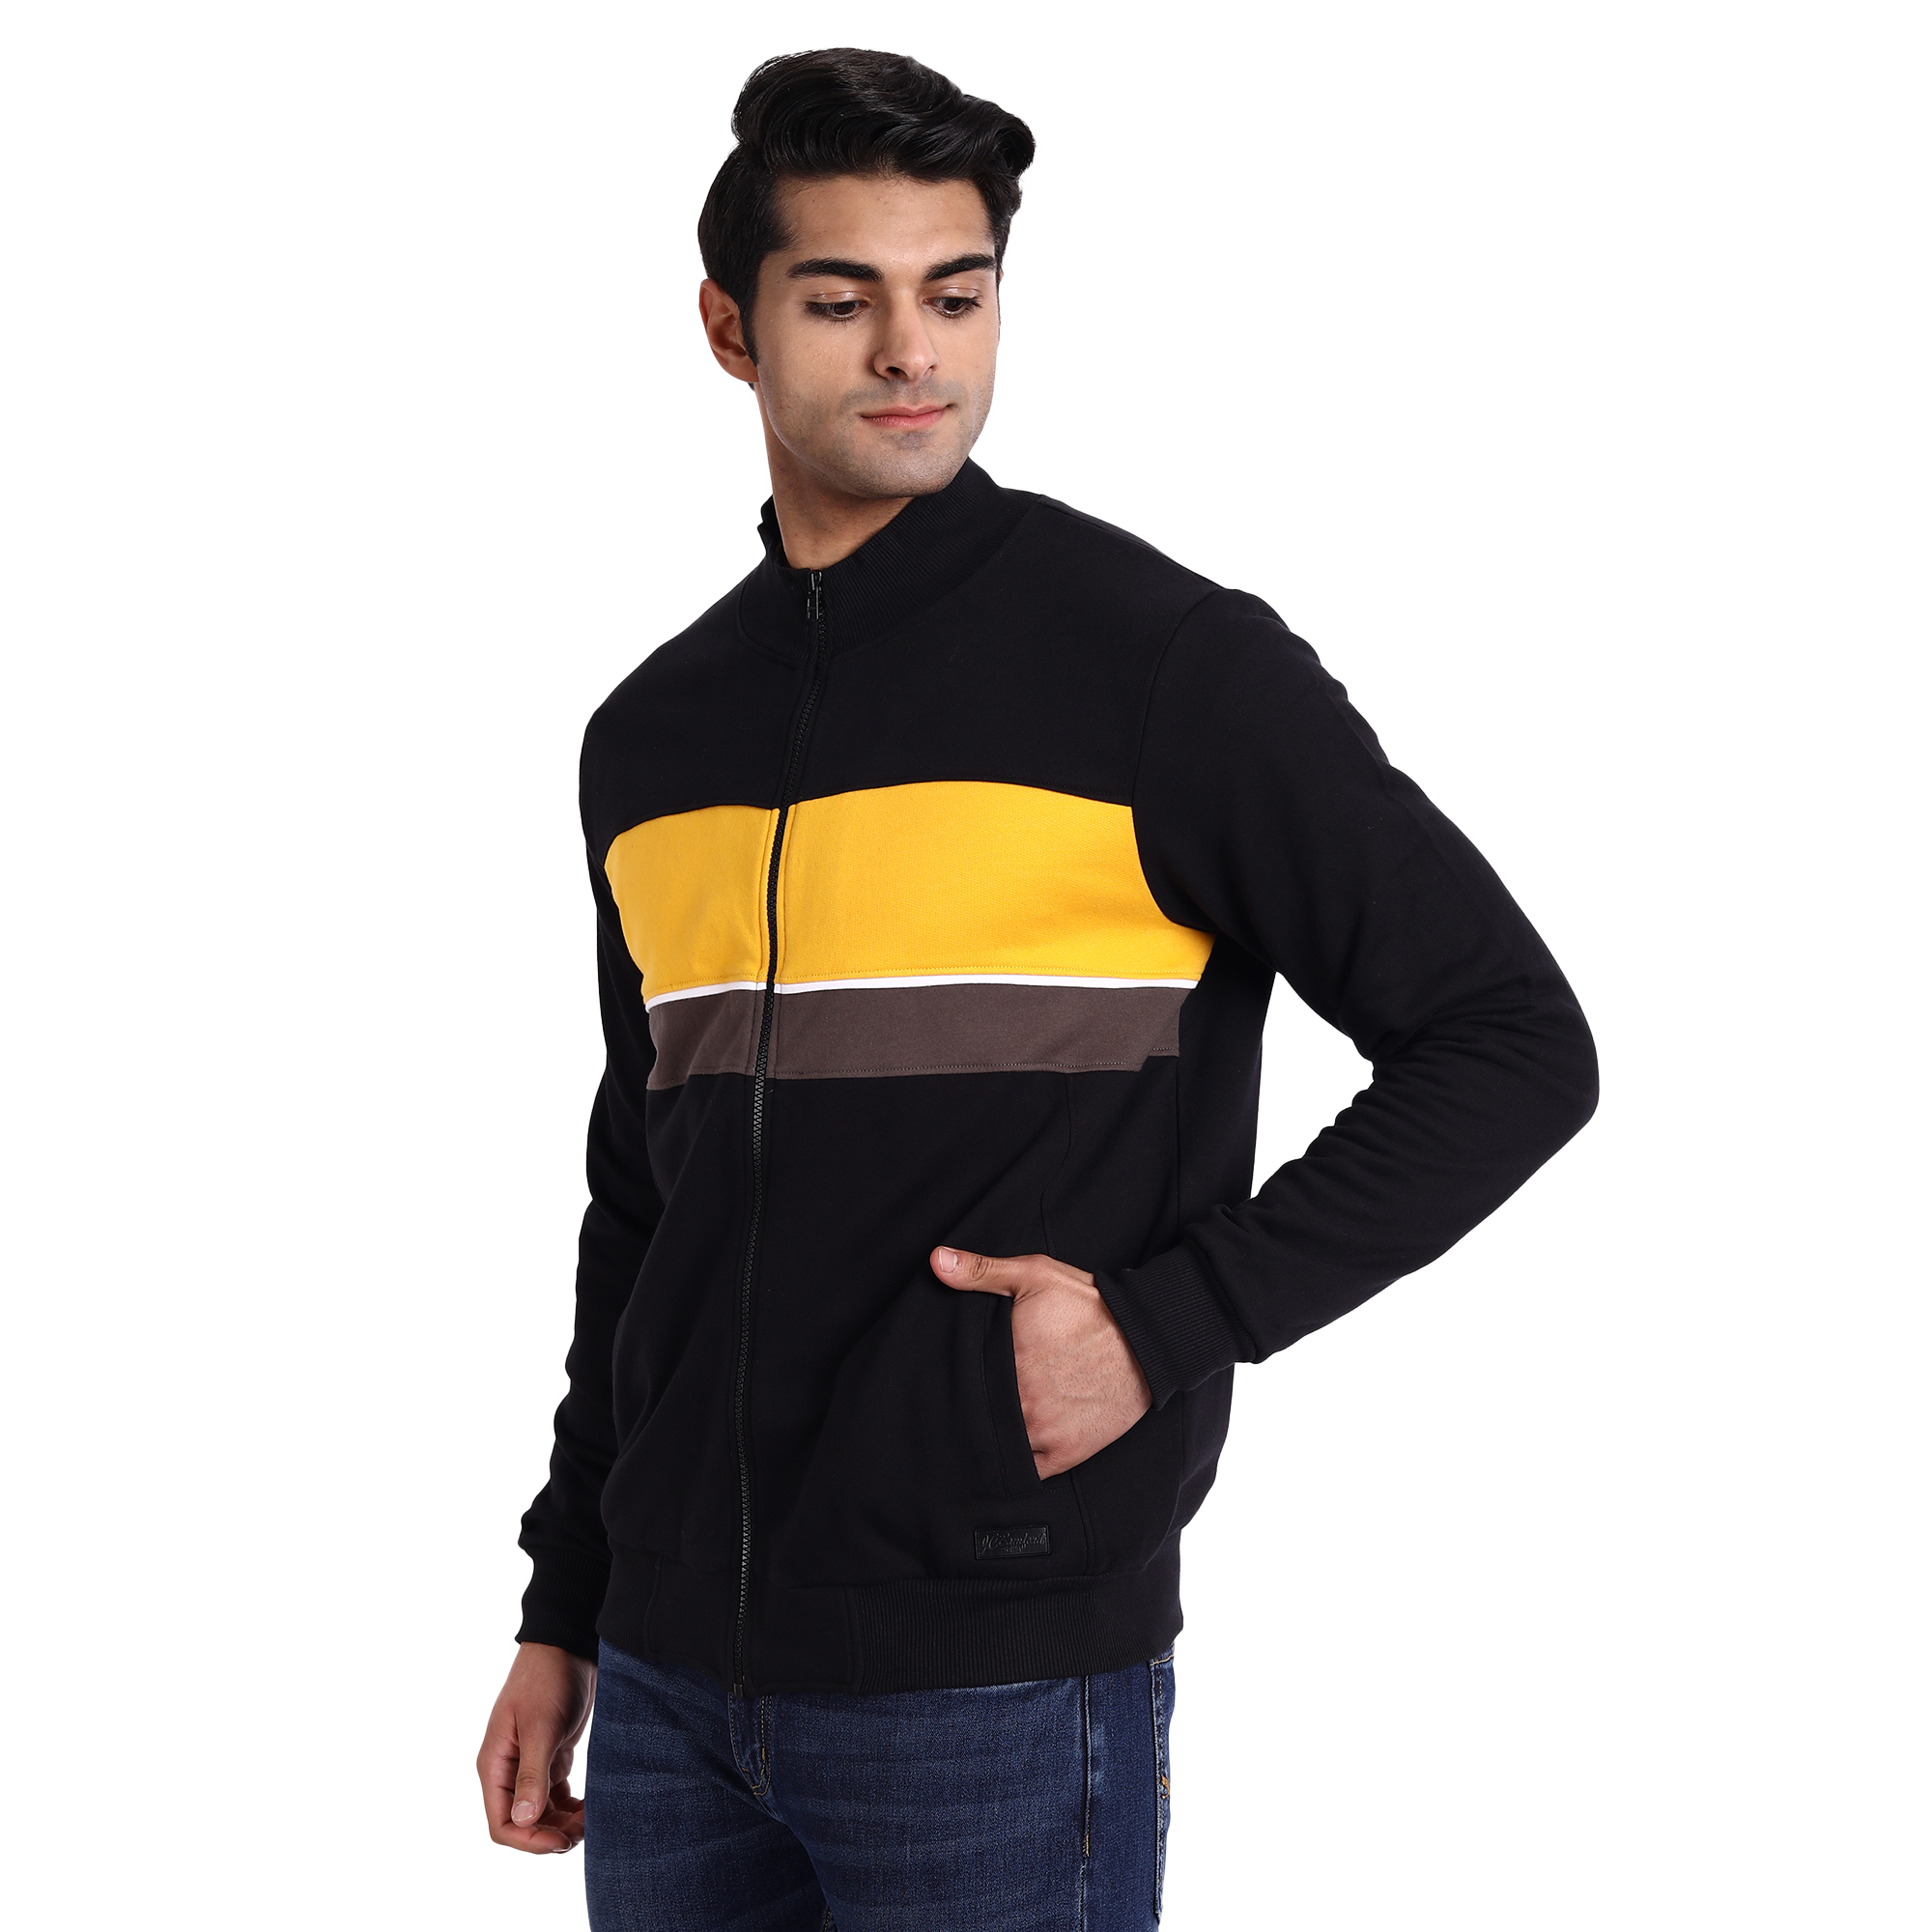 JCB Sweatshirt-FS – Welcome to the JCB merchandise shop India website